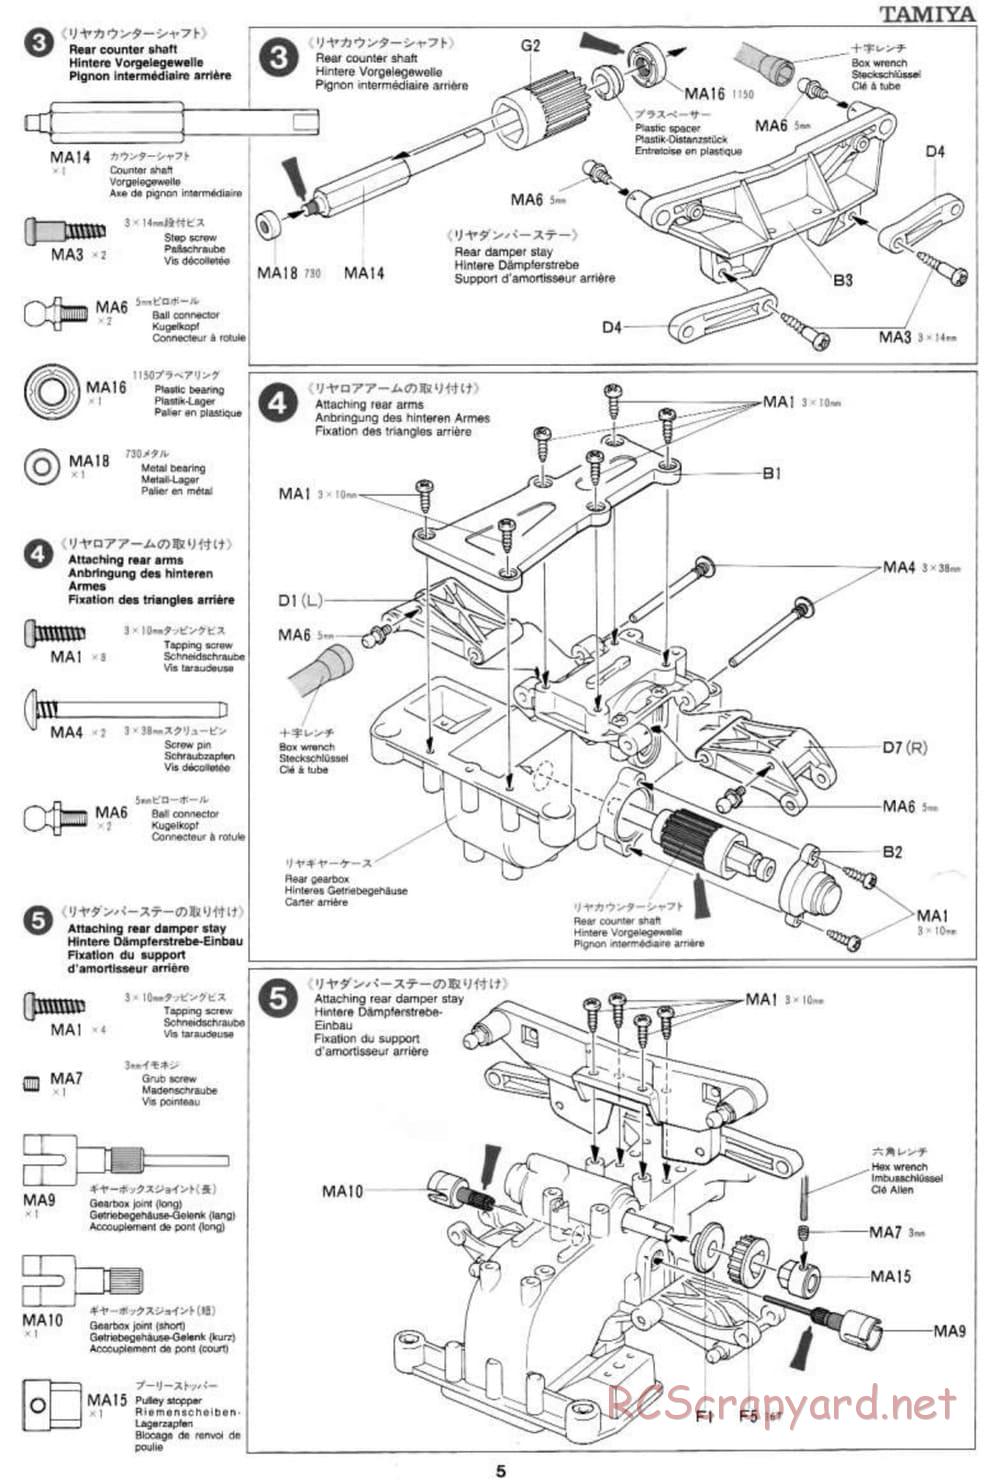 Tamiya - Subaru Impreza WRC 97 - TA-03F Chassis - Manual - Page 5